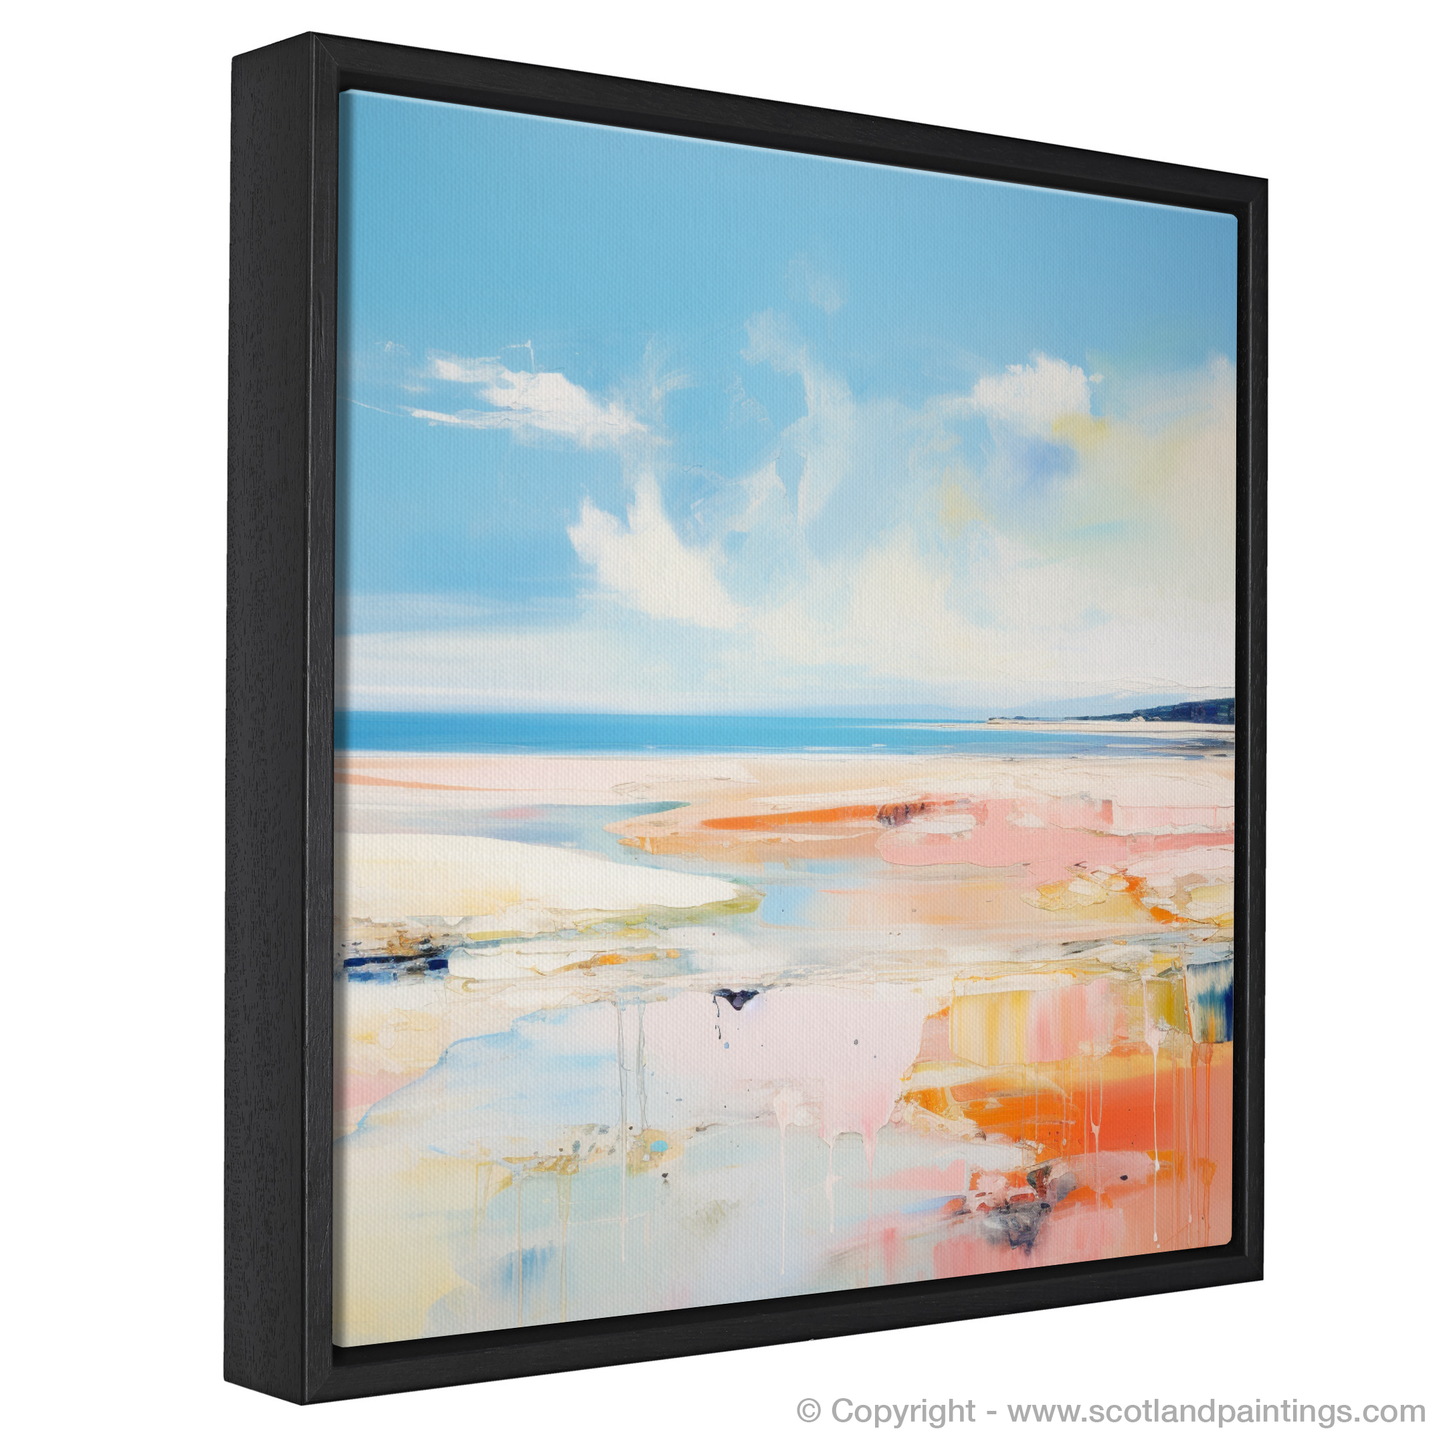 Painting and Art Print of Nairn Beach, Nairn in summer entitled "Summer Serenade at Nairn Beach".